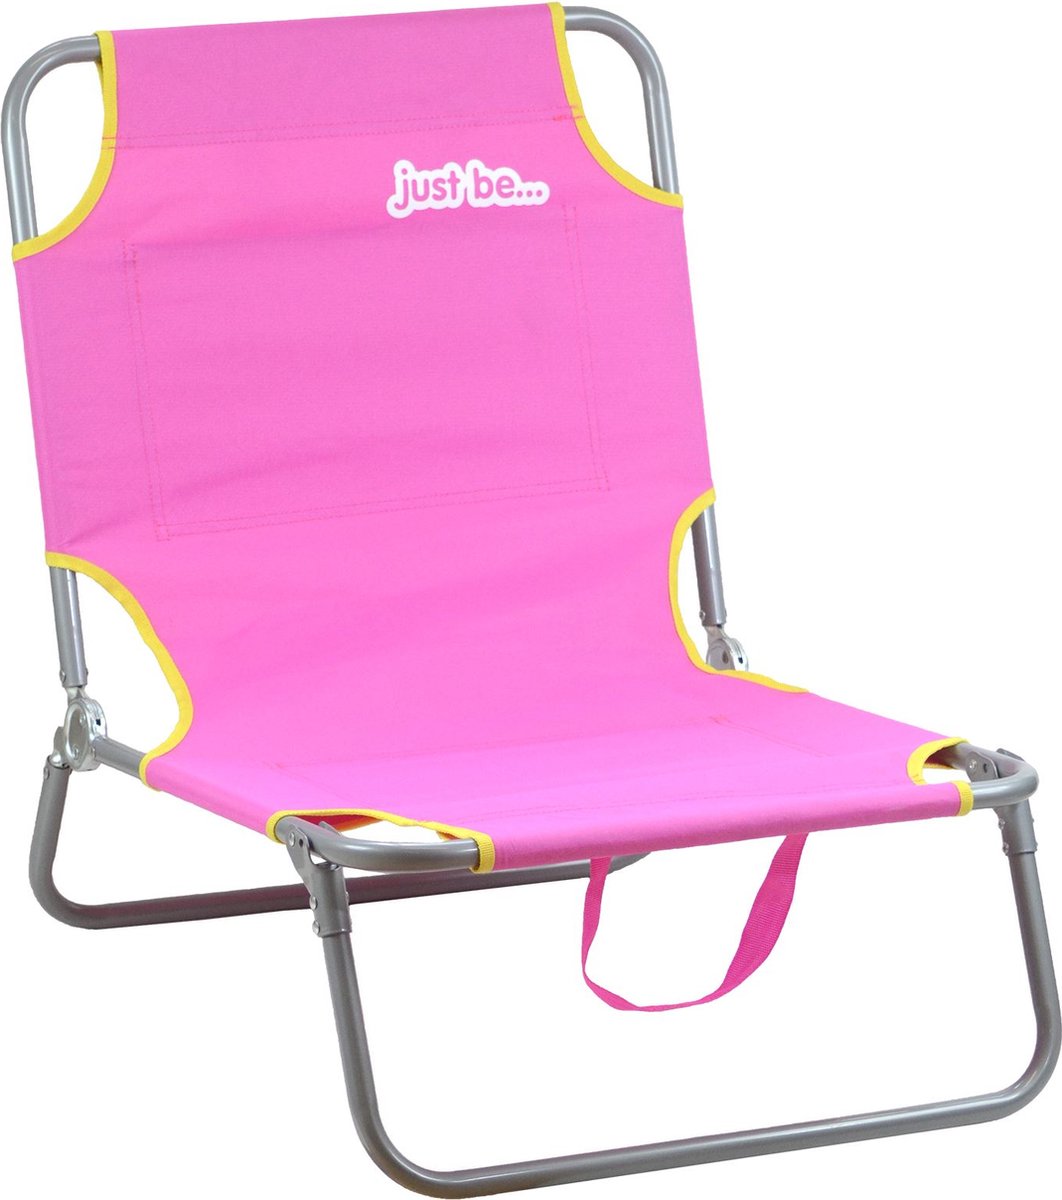 Just be - opvouwbare strandstoel - campingstoel - ligstoel - lichtgewicht - met opbergvakken - draagbaar (roze)